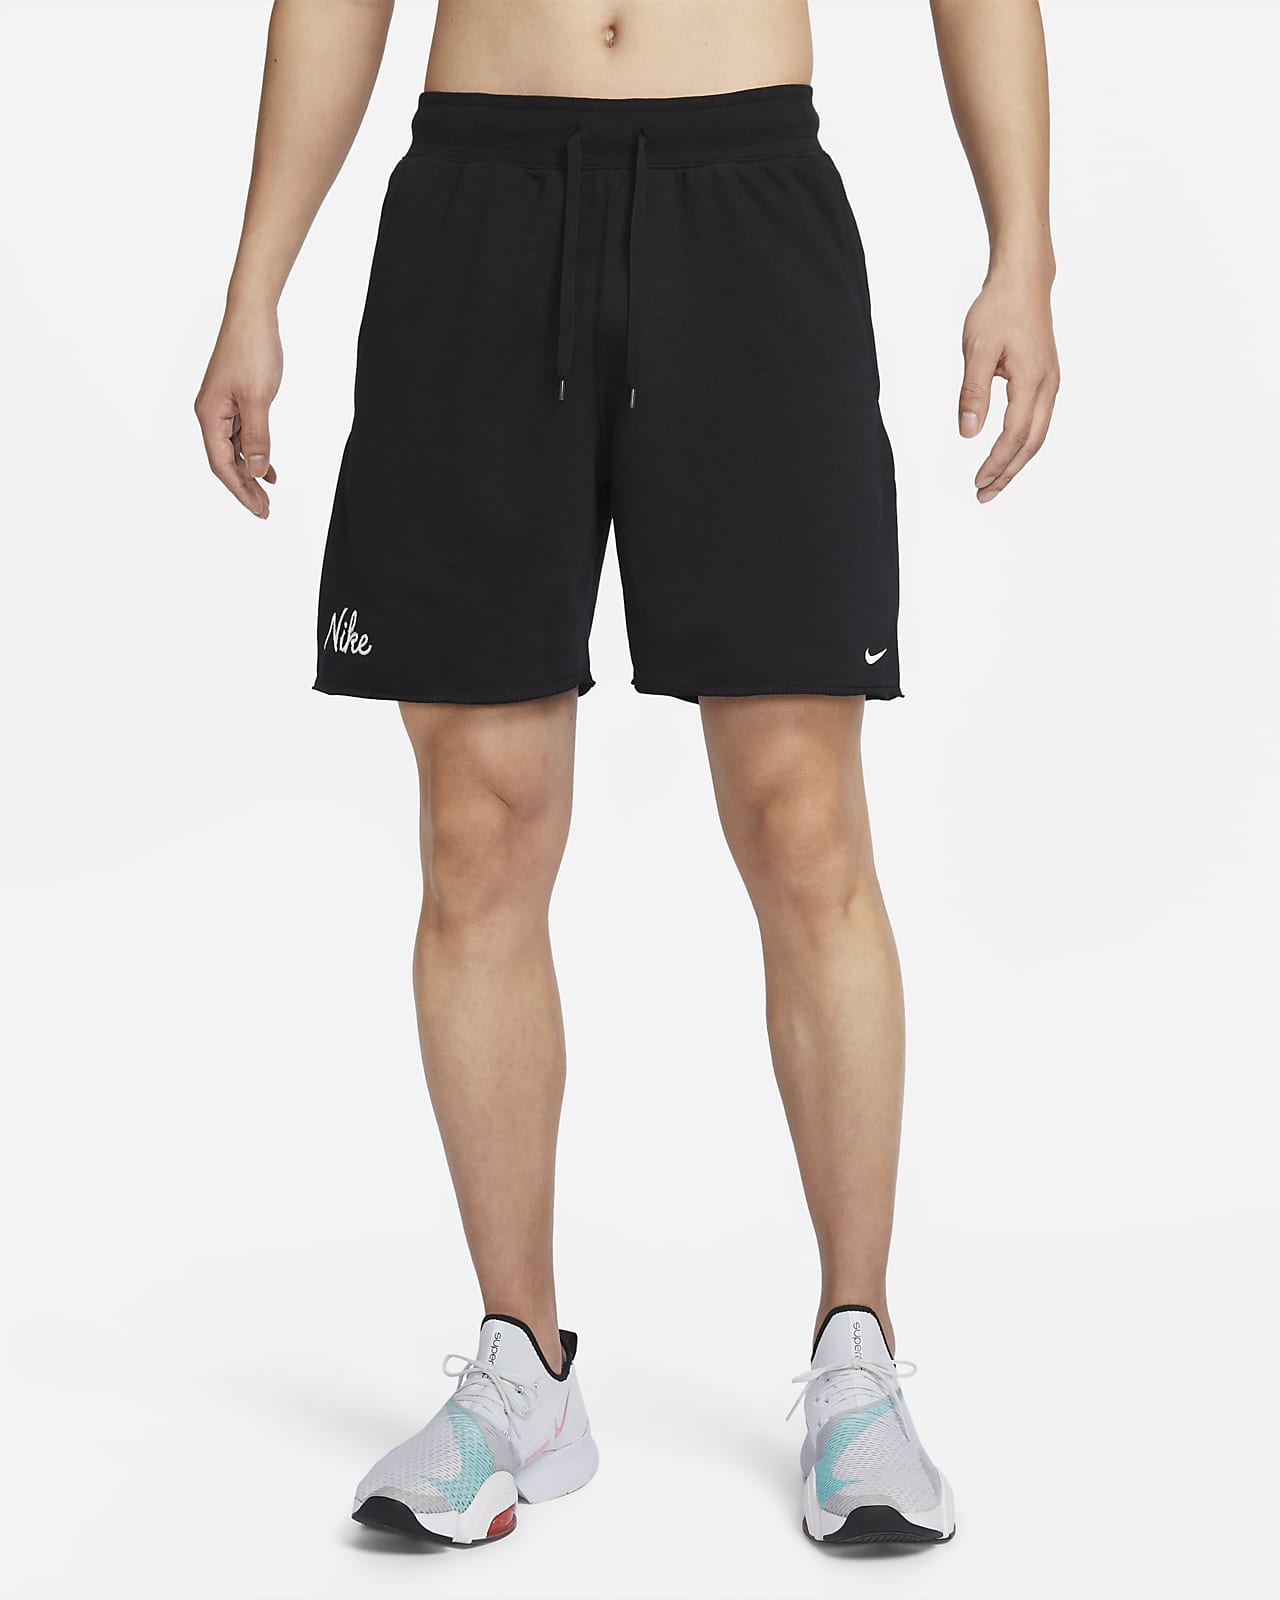 samtidig Kære fortjener Nike Dri-FIT Men's Fleece Fitness Shorts. Nike ID